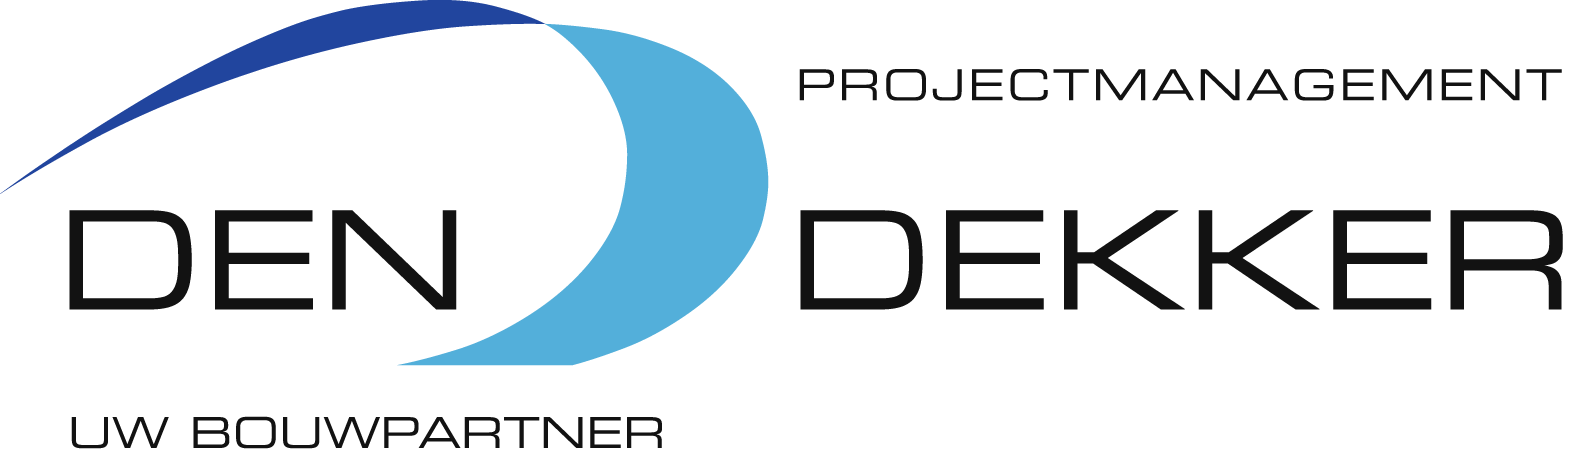 Den Dekker Projectmanagement logo